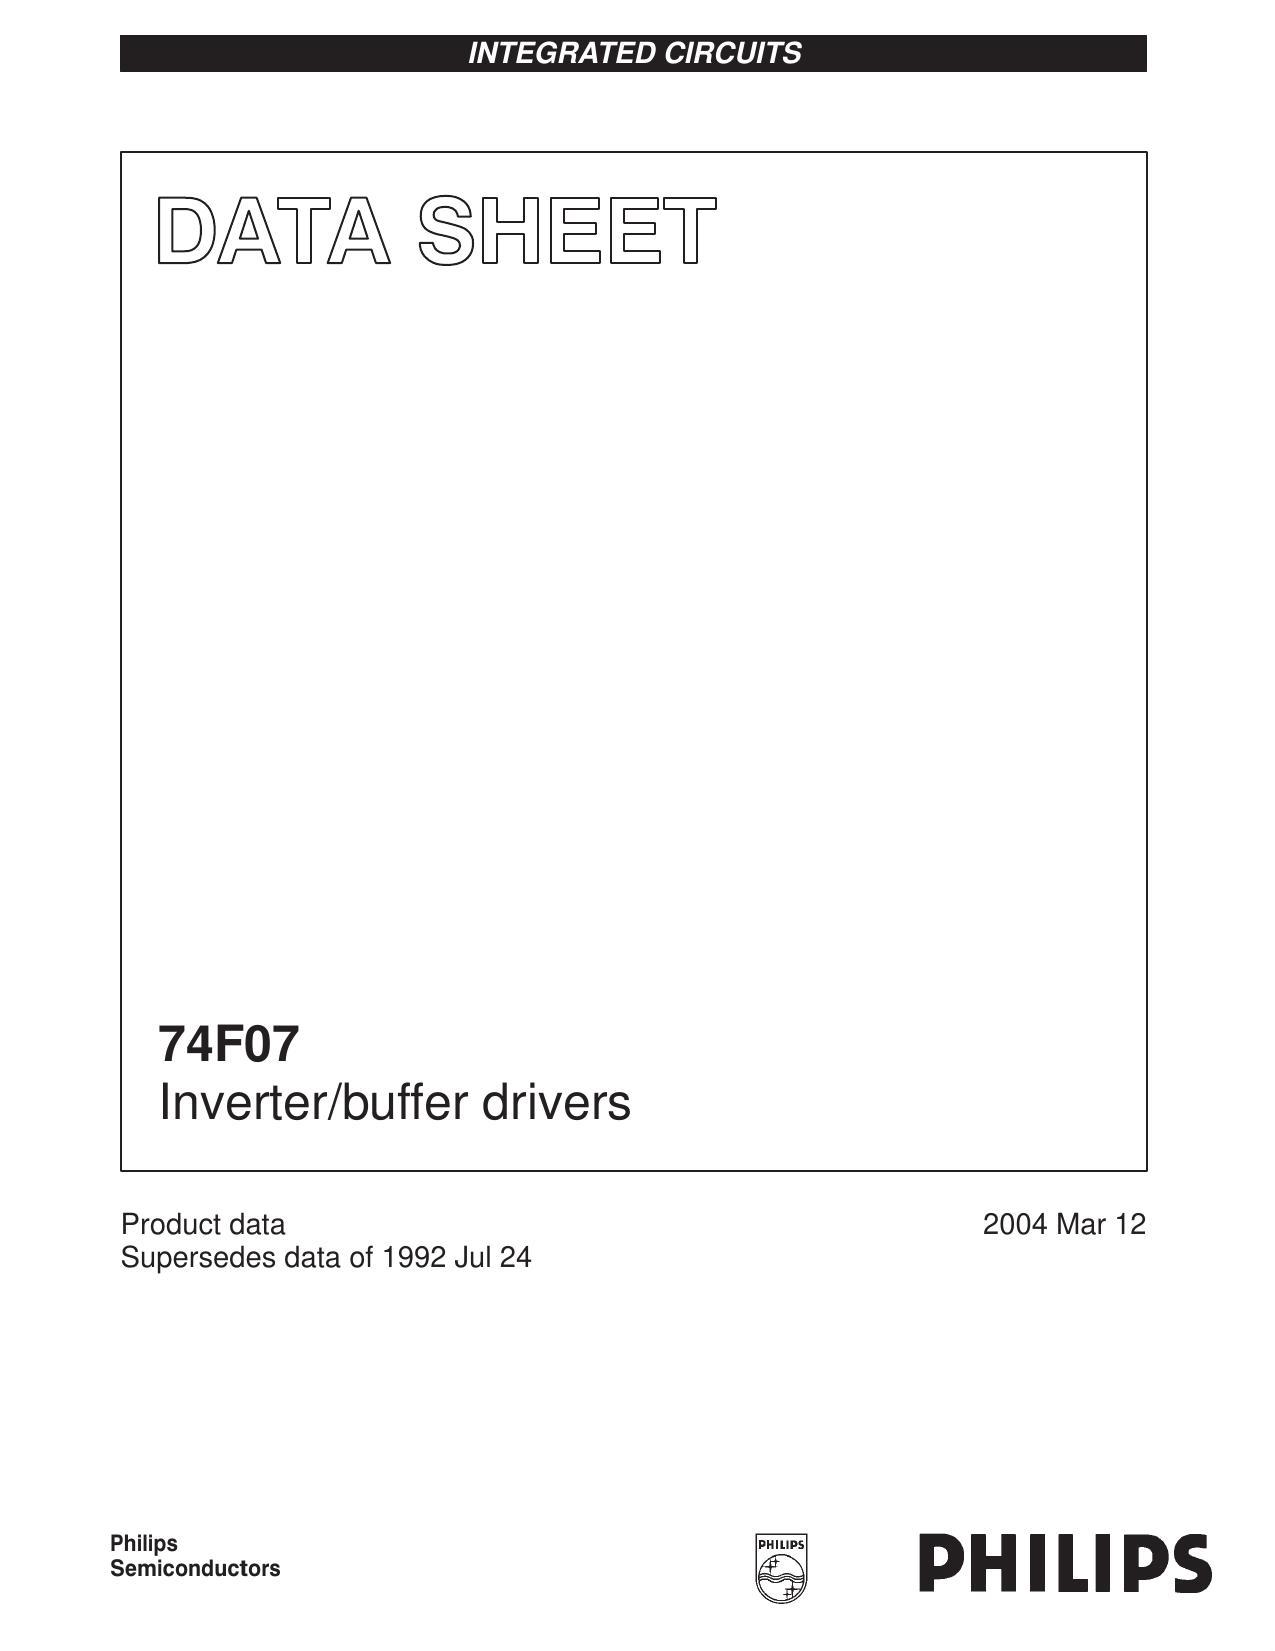 74f07-hex-inverterbuffer-drivers-open-collector.pdf